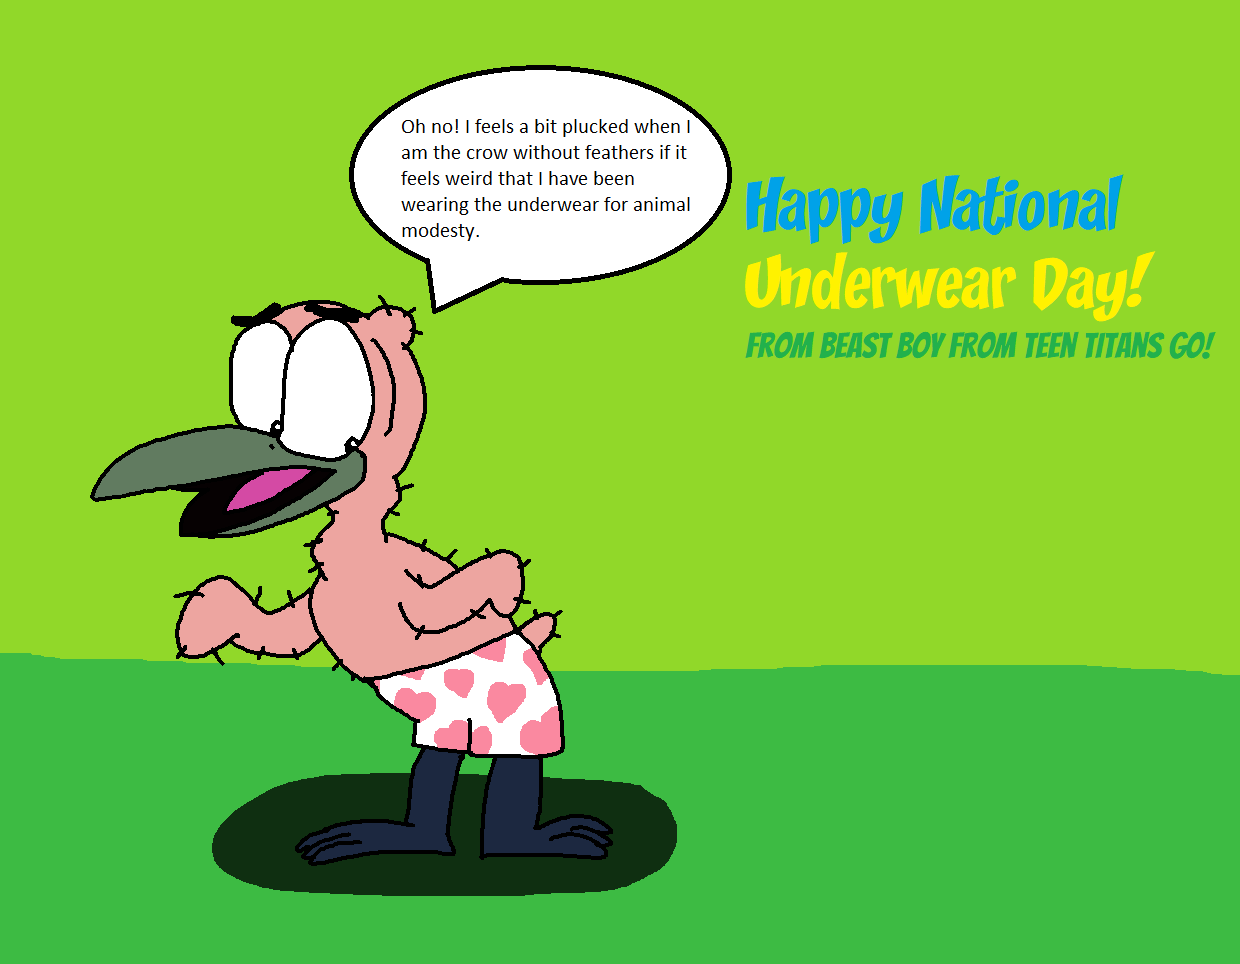 Happy National Underwear Day from Beast Boy by DarrenEwertChannel